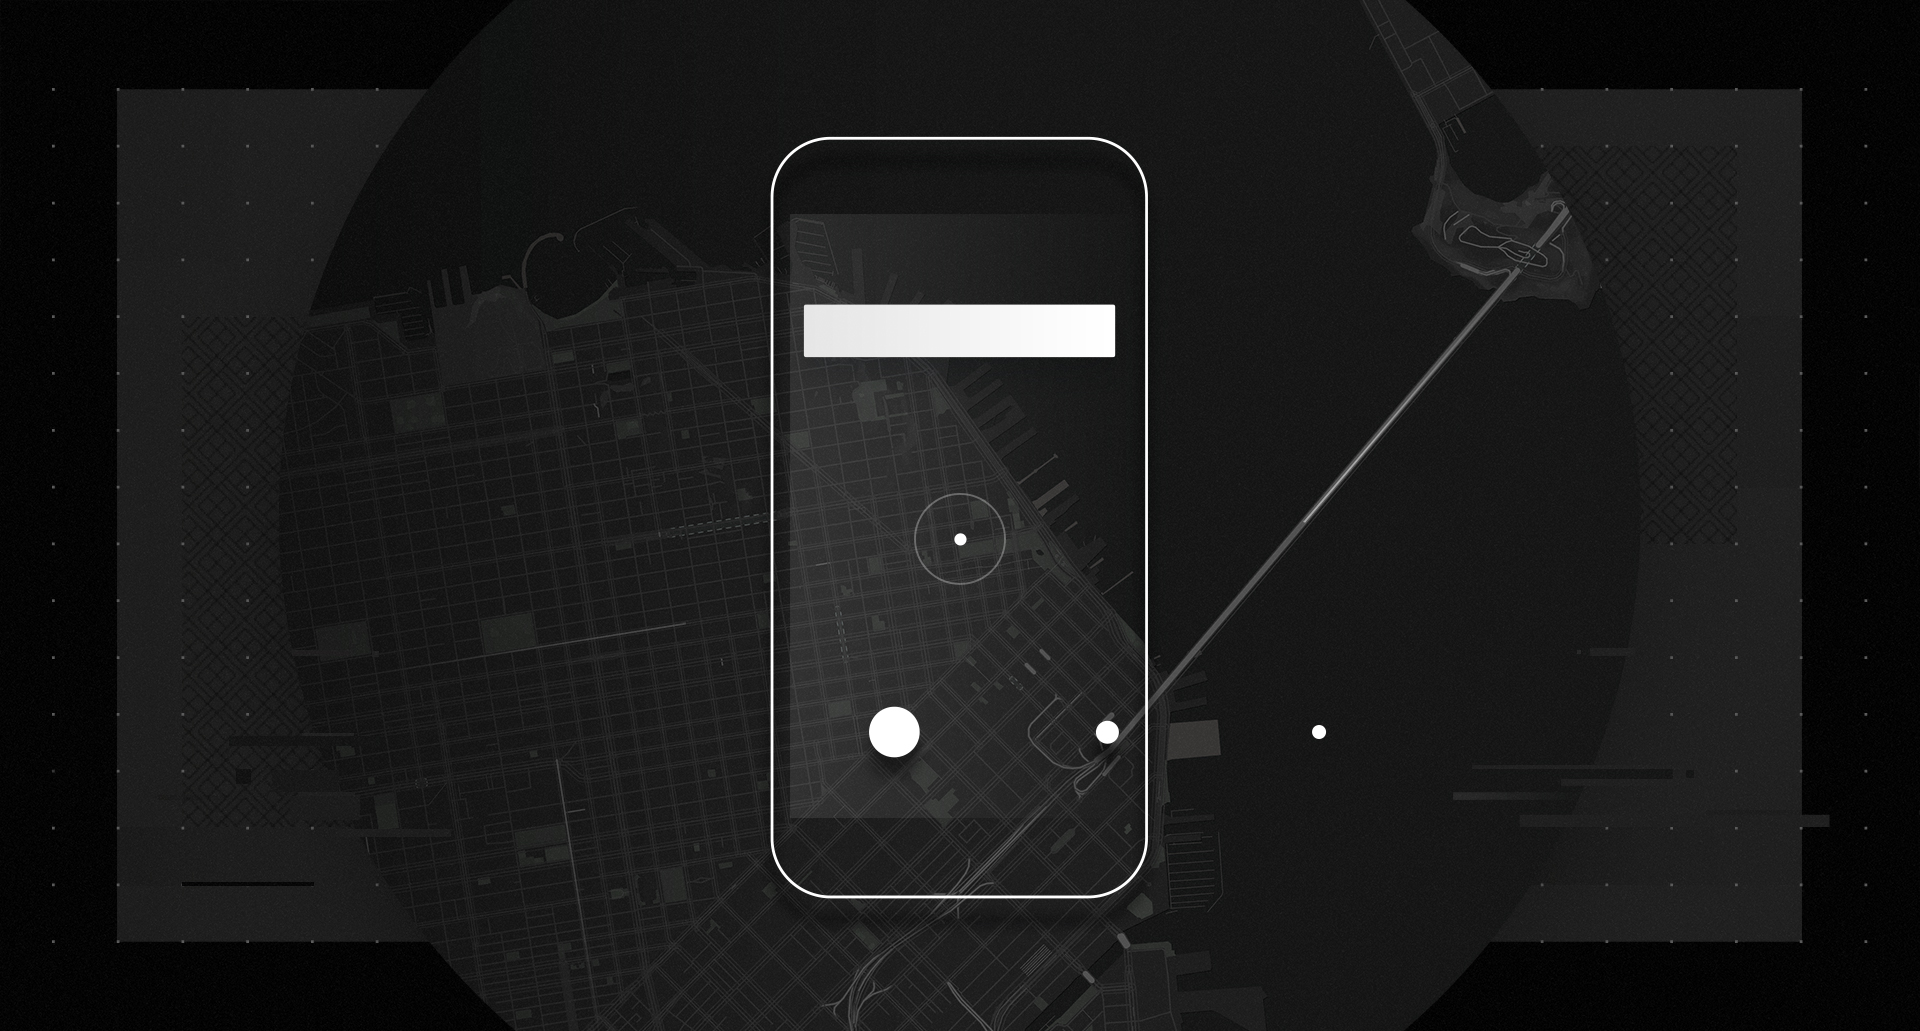 Designing the latest generation of Uber Navigation: maps built for  ridesharing, by Dylan Babbs, Uber Design